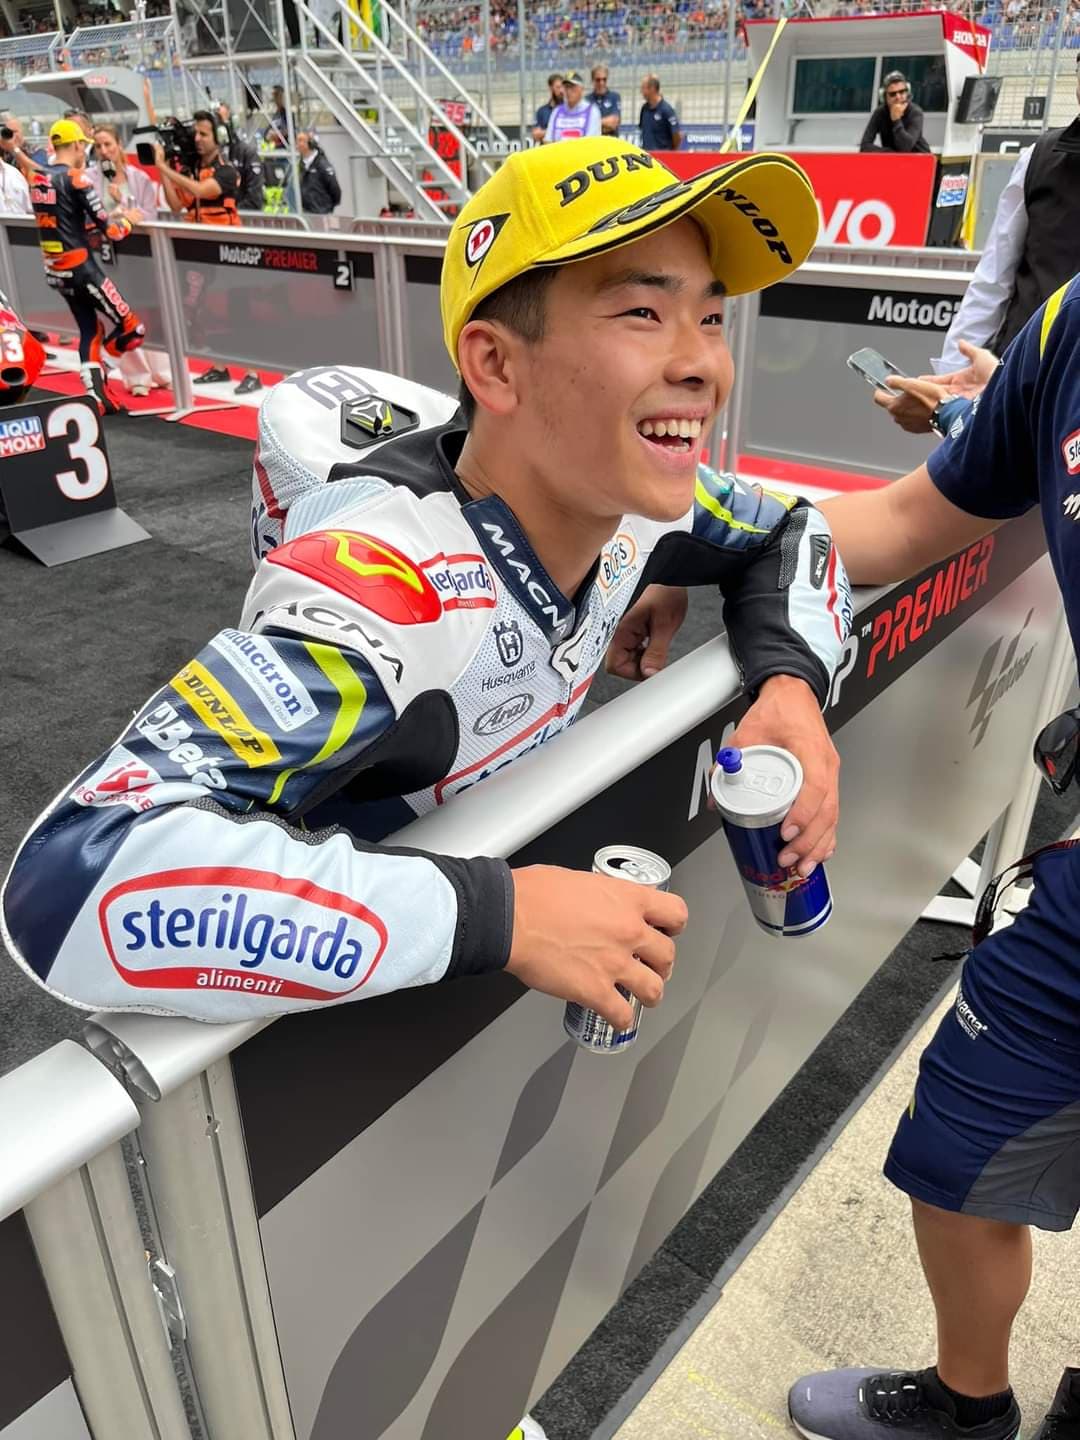 Featured image for “Moto3: Ayumu Sasaki Wins The Moto3 Race In Austria.”